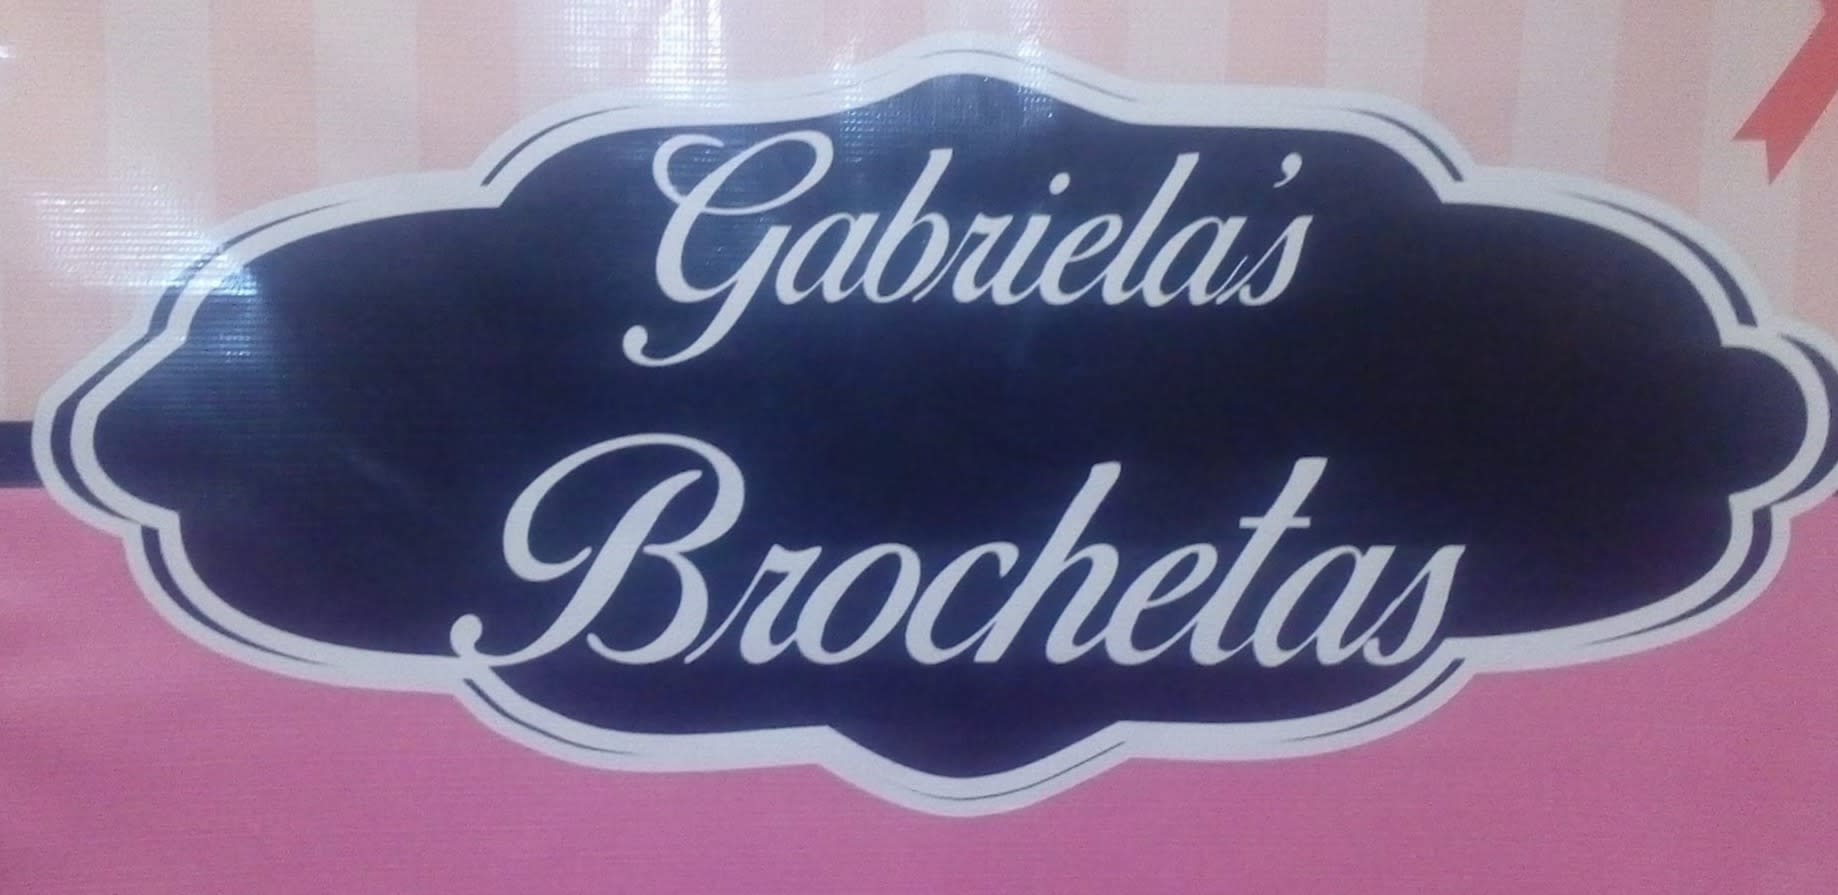 Gabrielas Brochetas